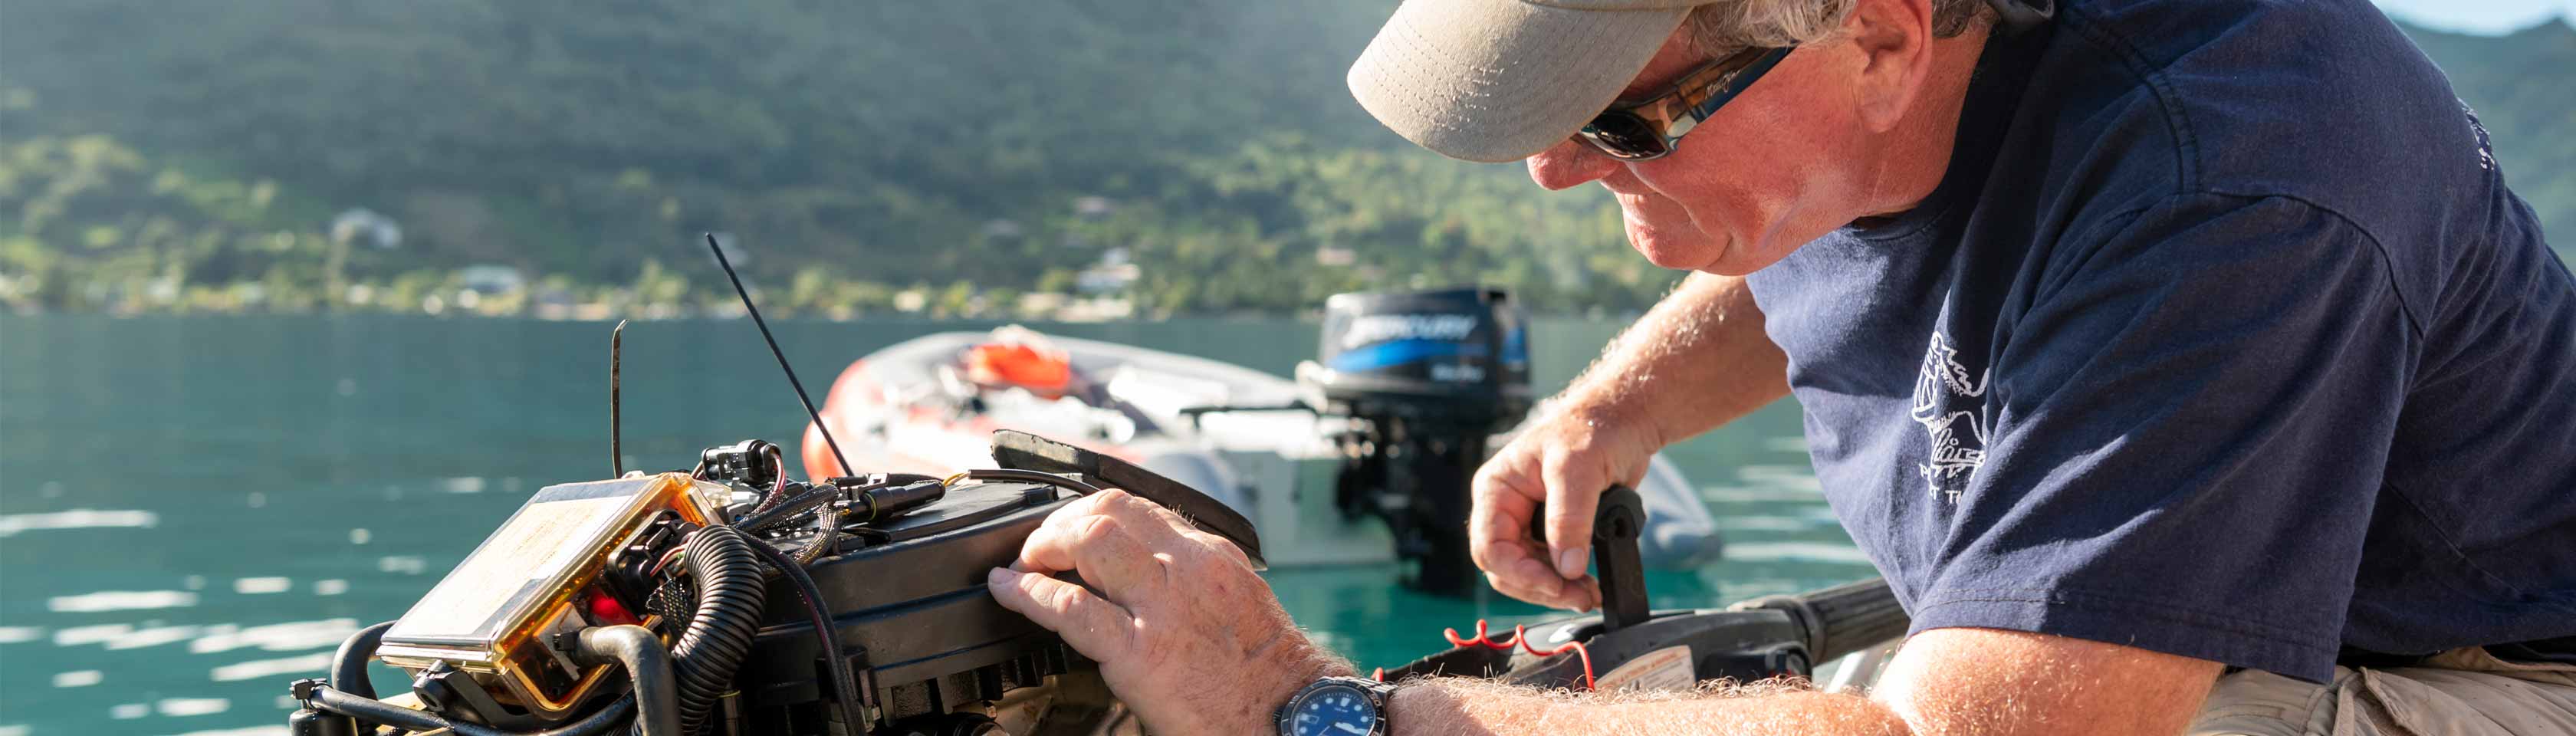 Russ Schmitt fixing a boat in the water